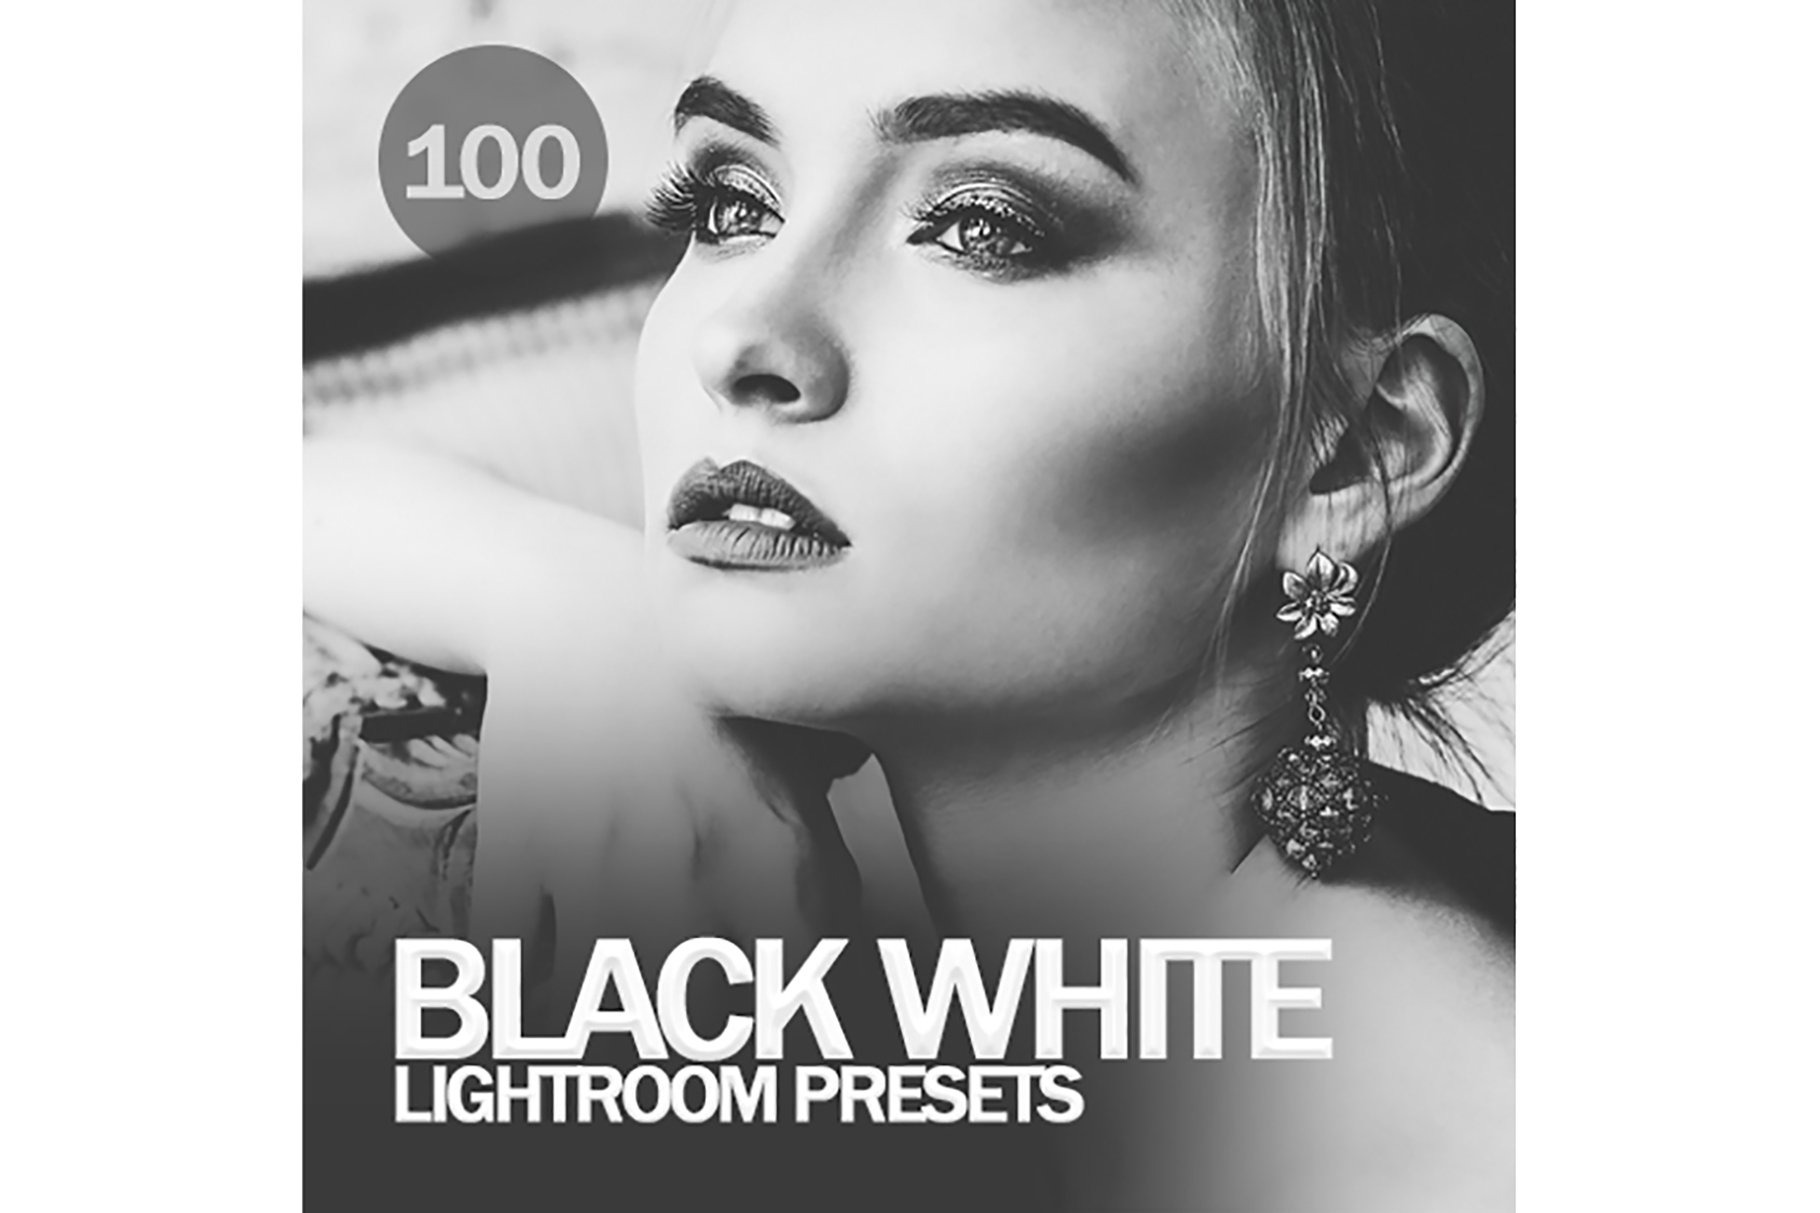 Black White Lightroom Presetscover image.